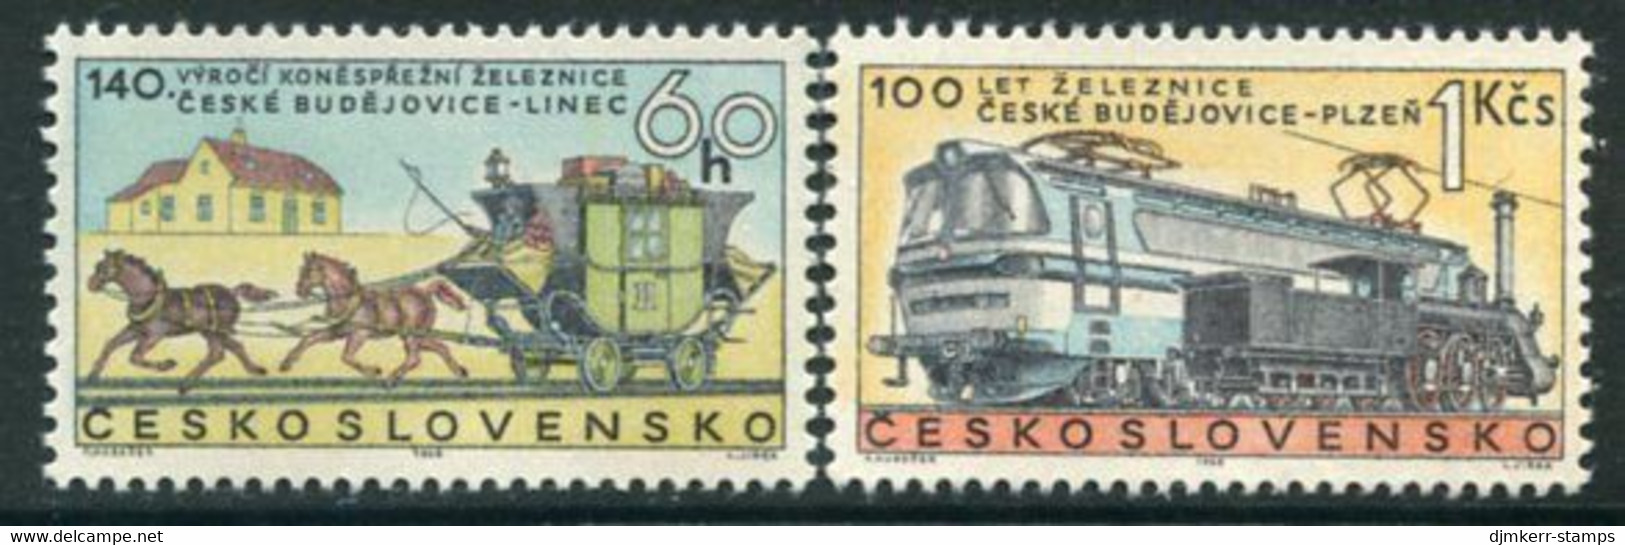 CZECHOSLOVAKIA 1968 Railway Anniversaries MNH / **   Michel 1806-07 - Unused Stamps